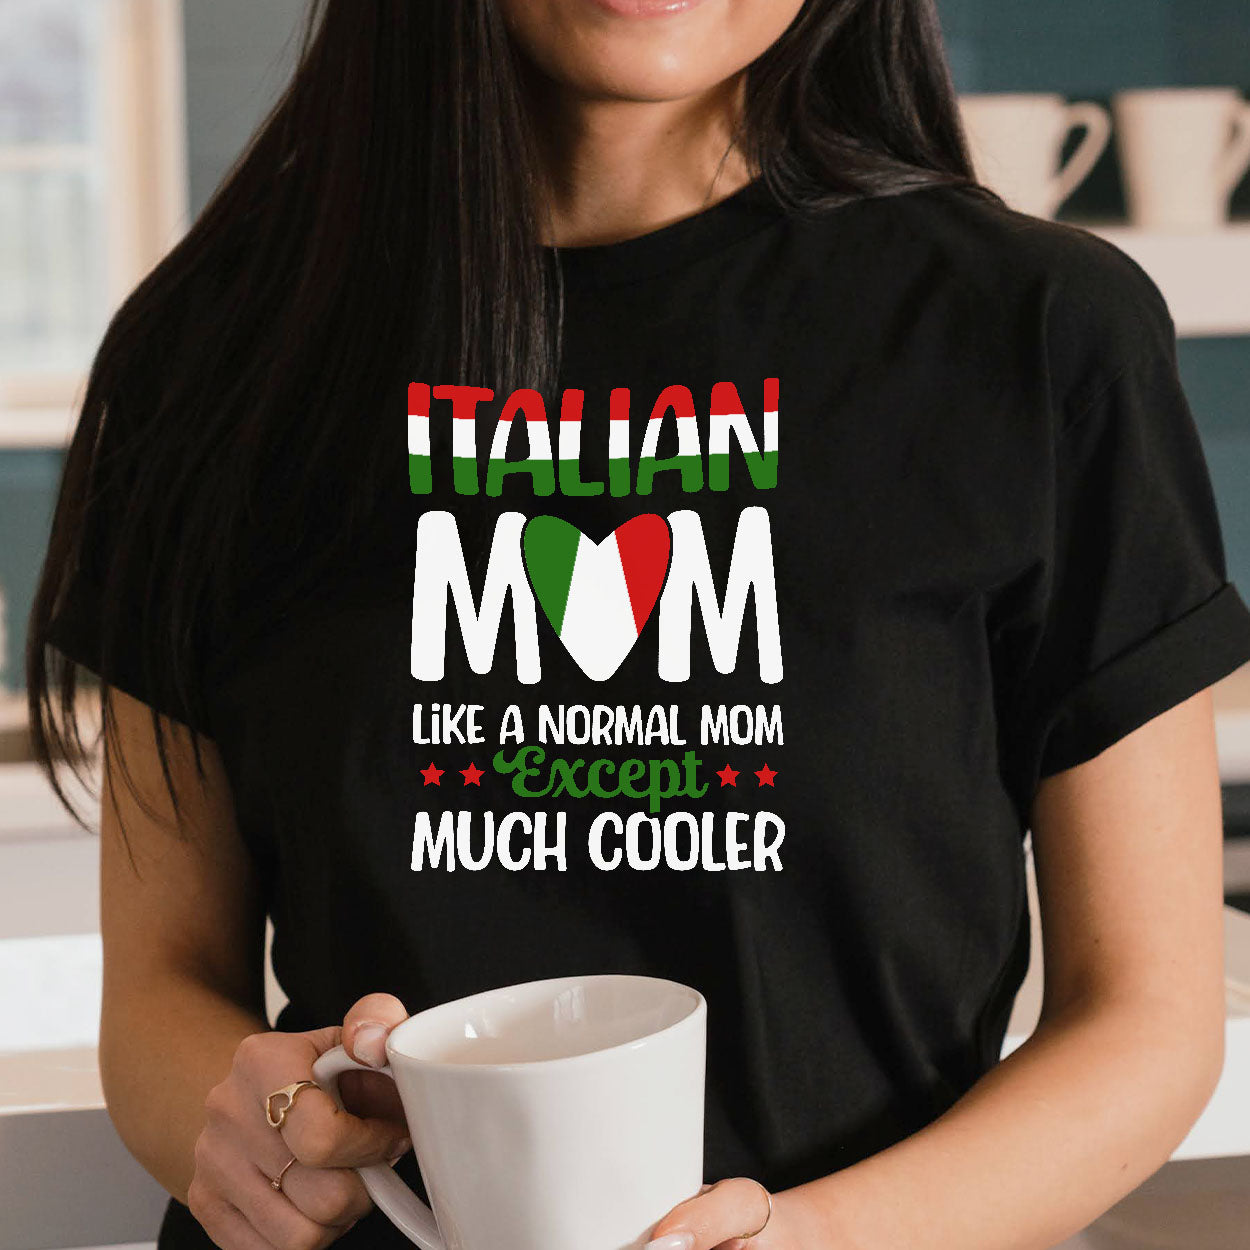 Italian Moms Are Cooler Womens Tee